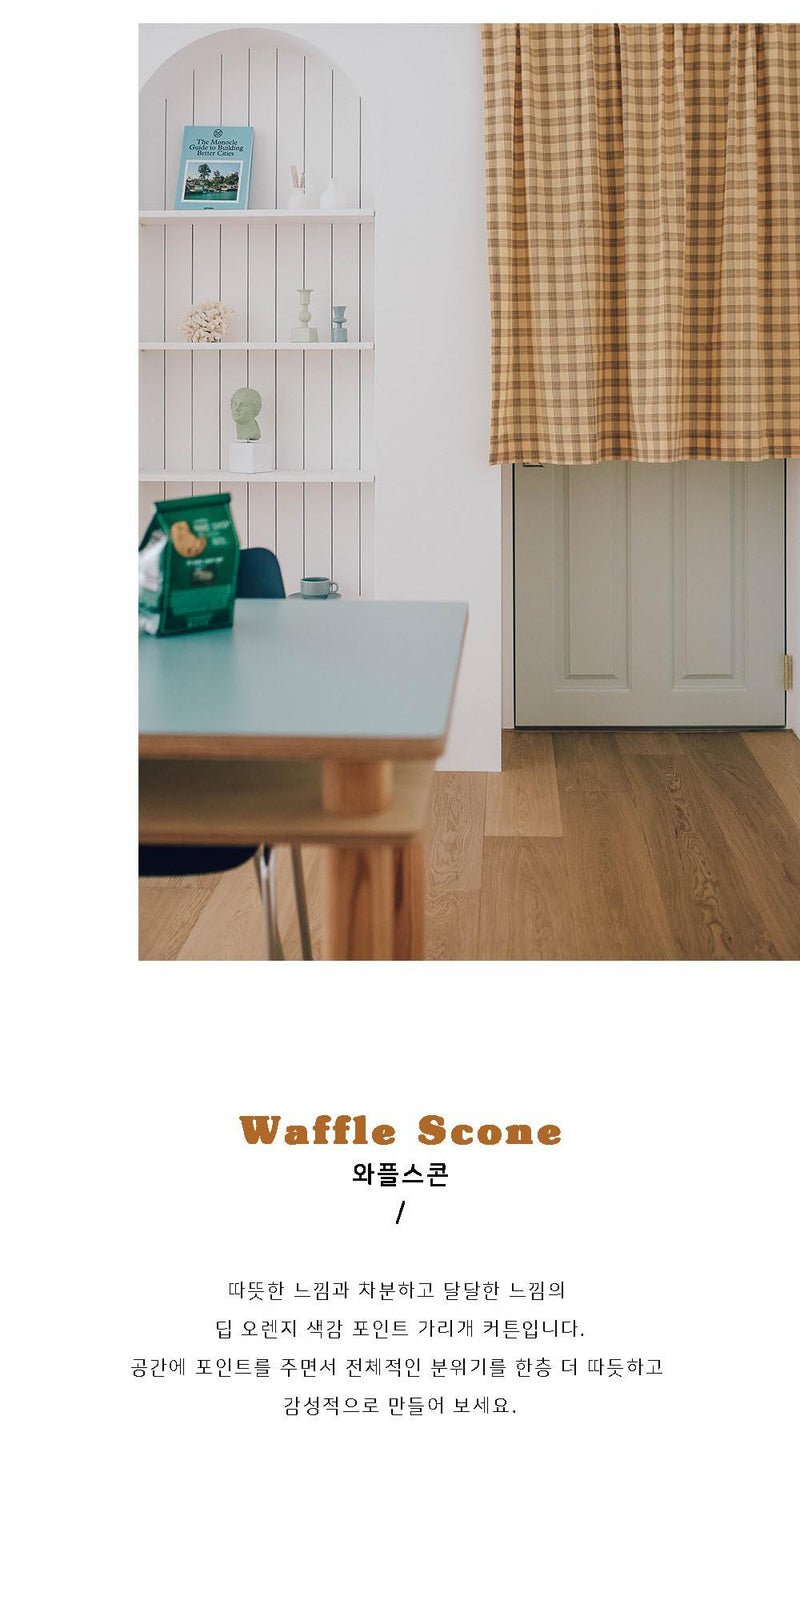 Waffle scone curtain